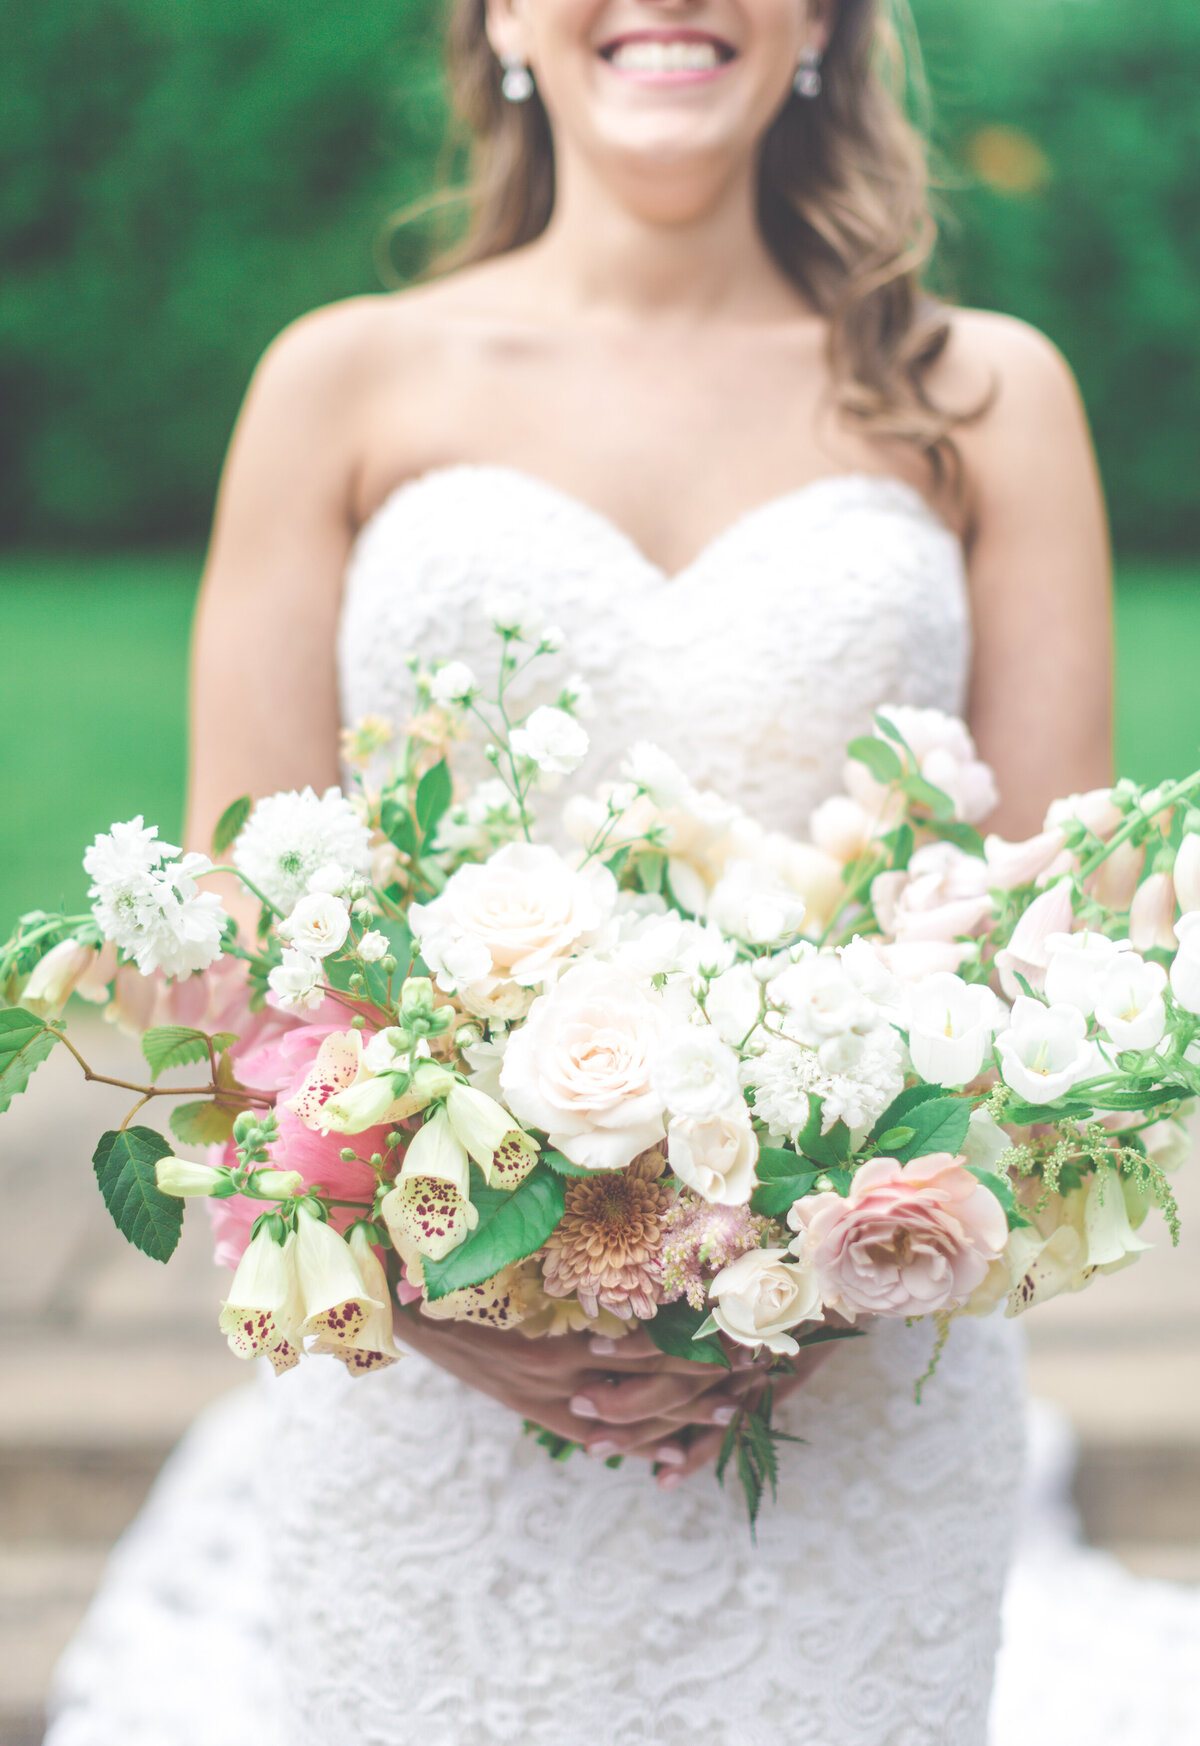 Atelier-Carmel-Montrea-Luxury-Wedding-Florist-GALLERIES-10